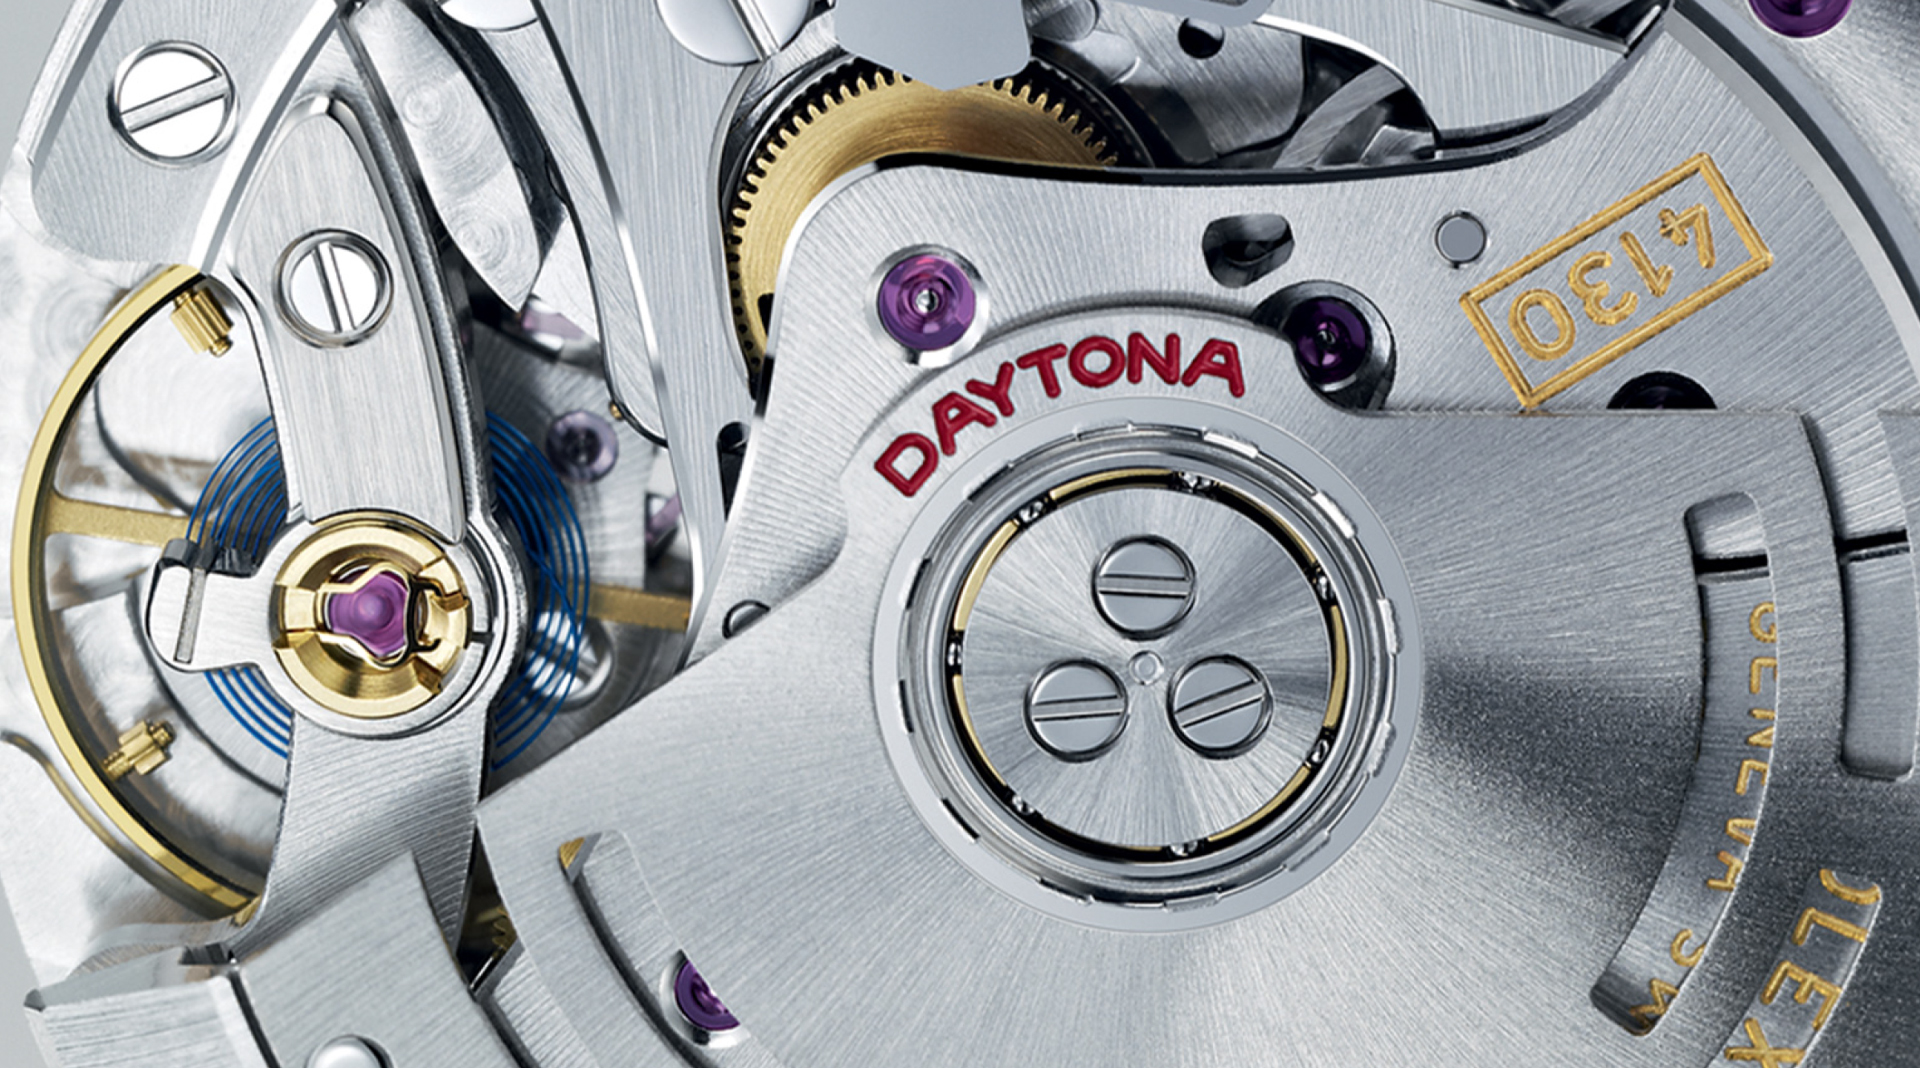 Rolex Cosmograph Daytona movement 4130